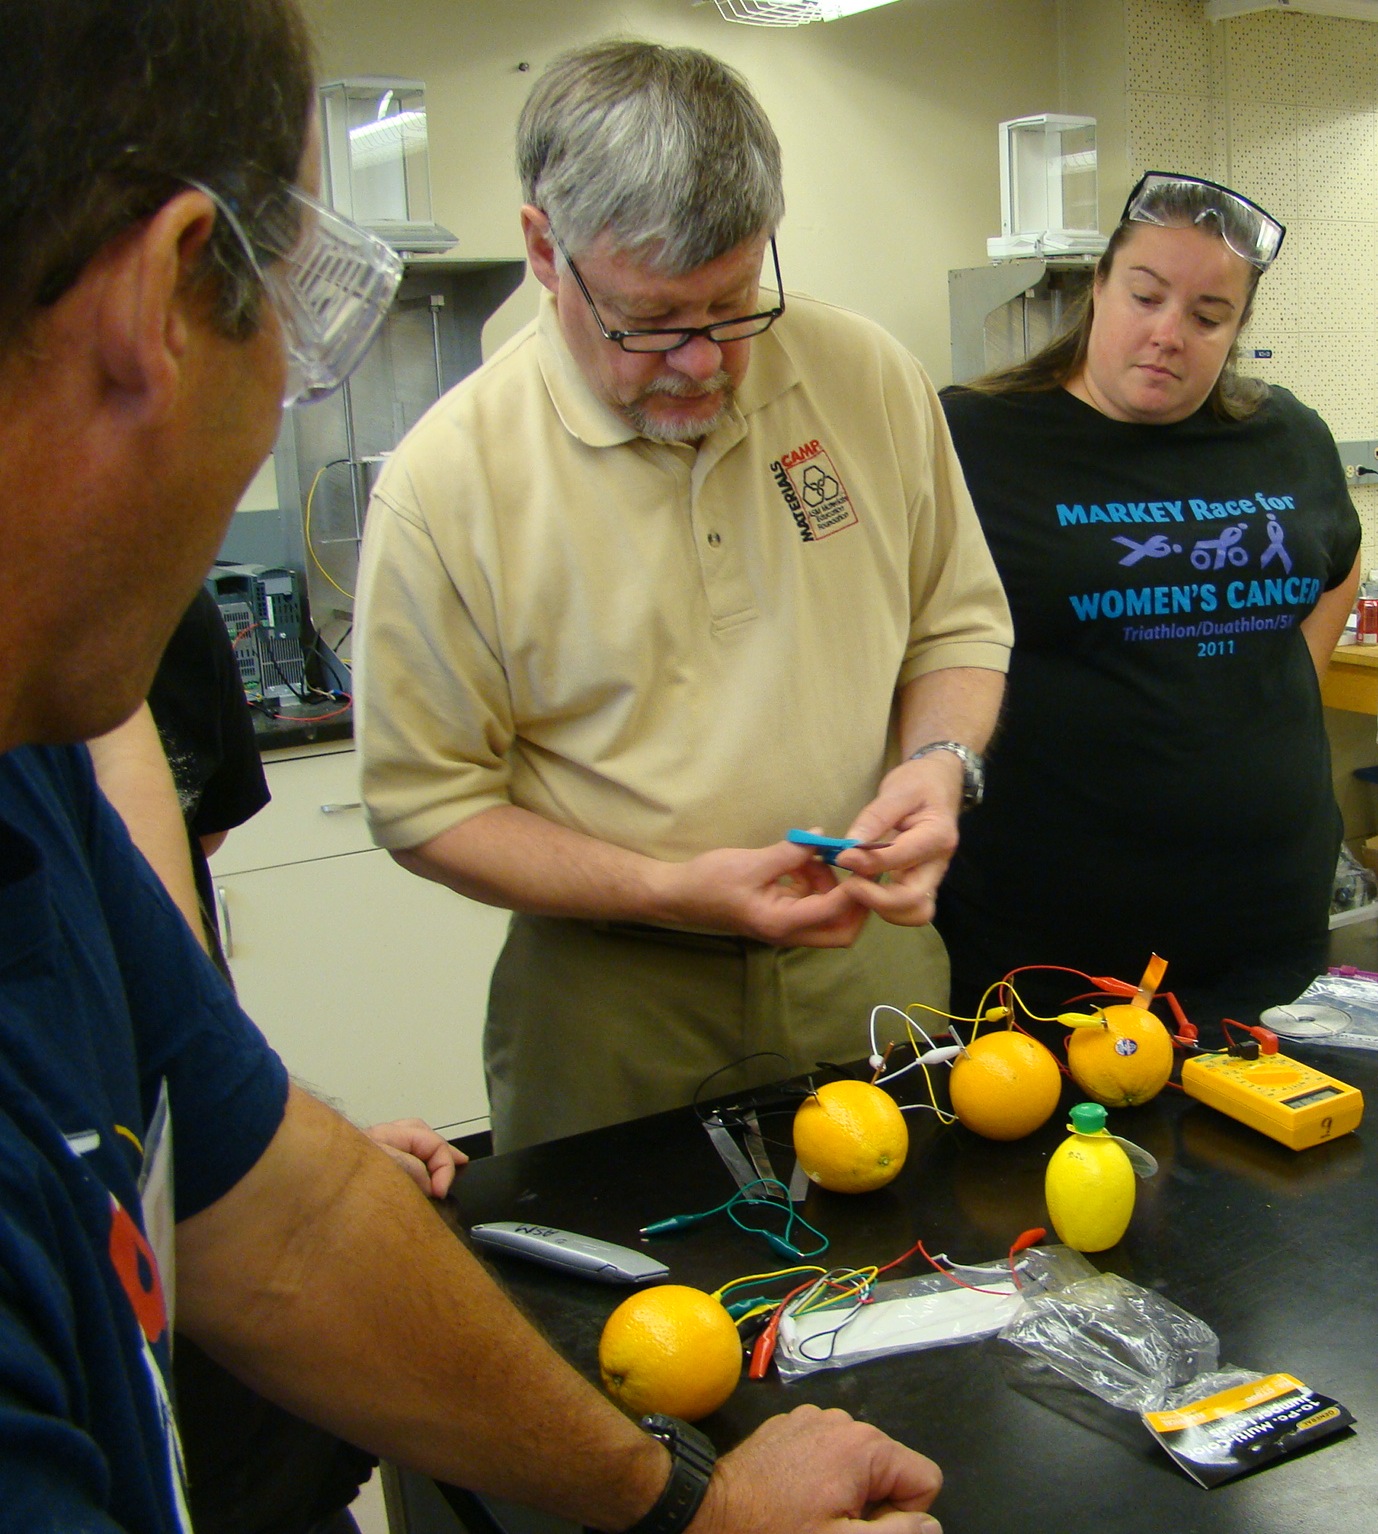 Master teacher Nydam demostrates lemon battery experiment